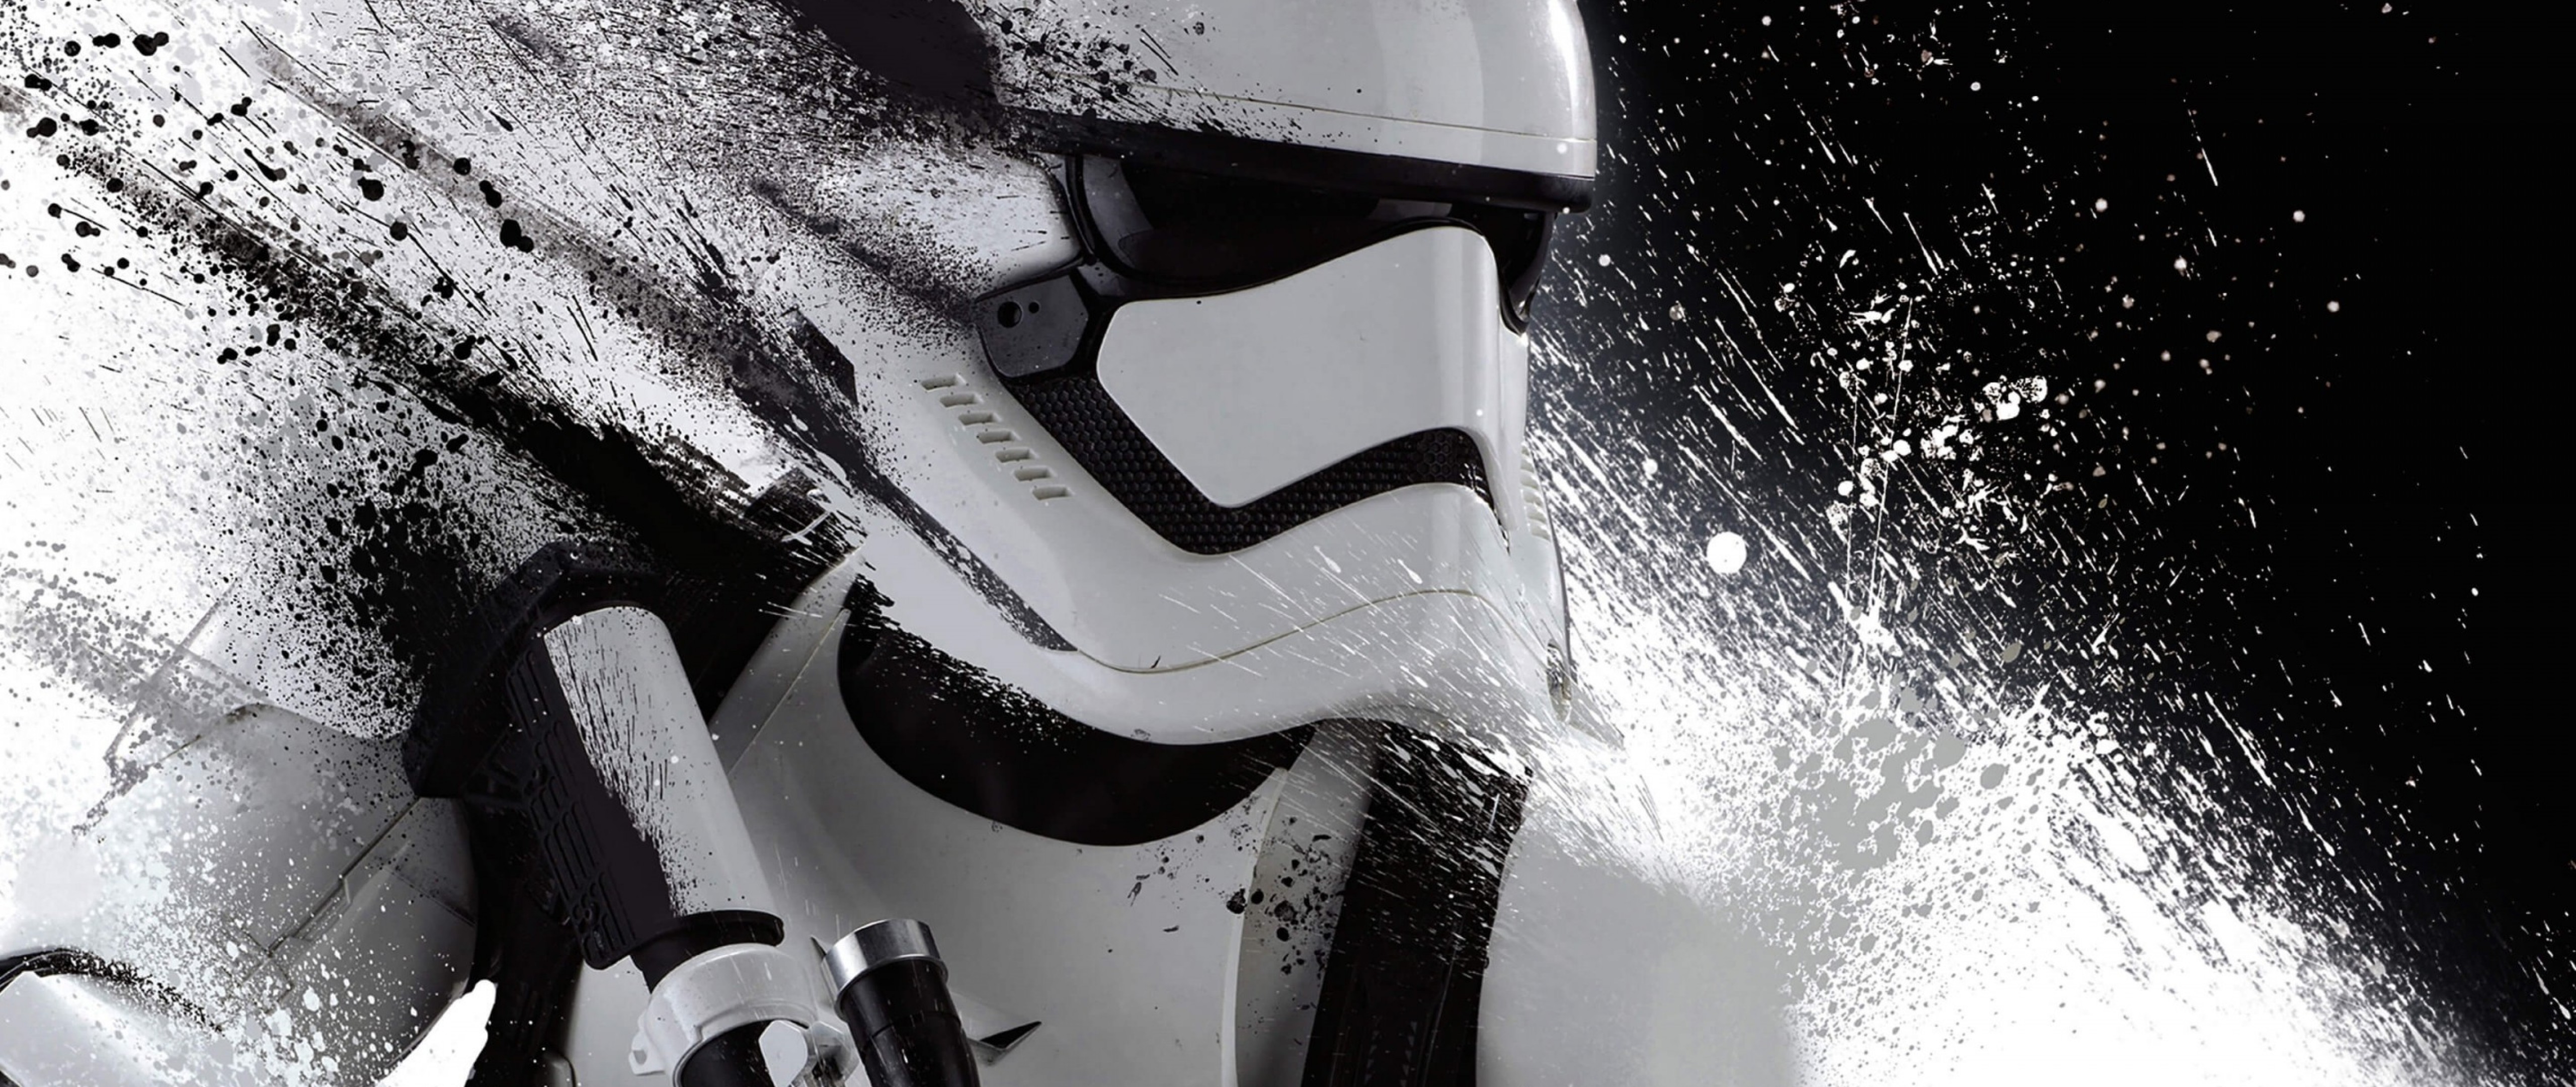 Star Wars Stormtrooper HD Wallpaper for Desktop and Mobiles